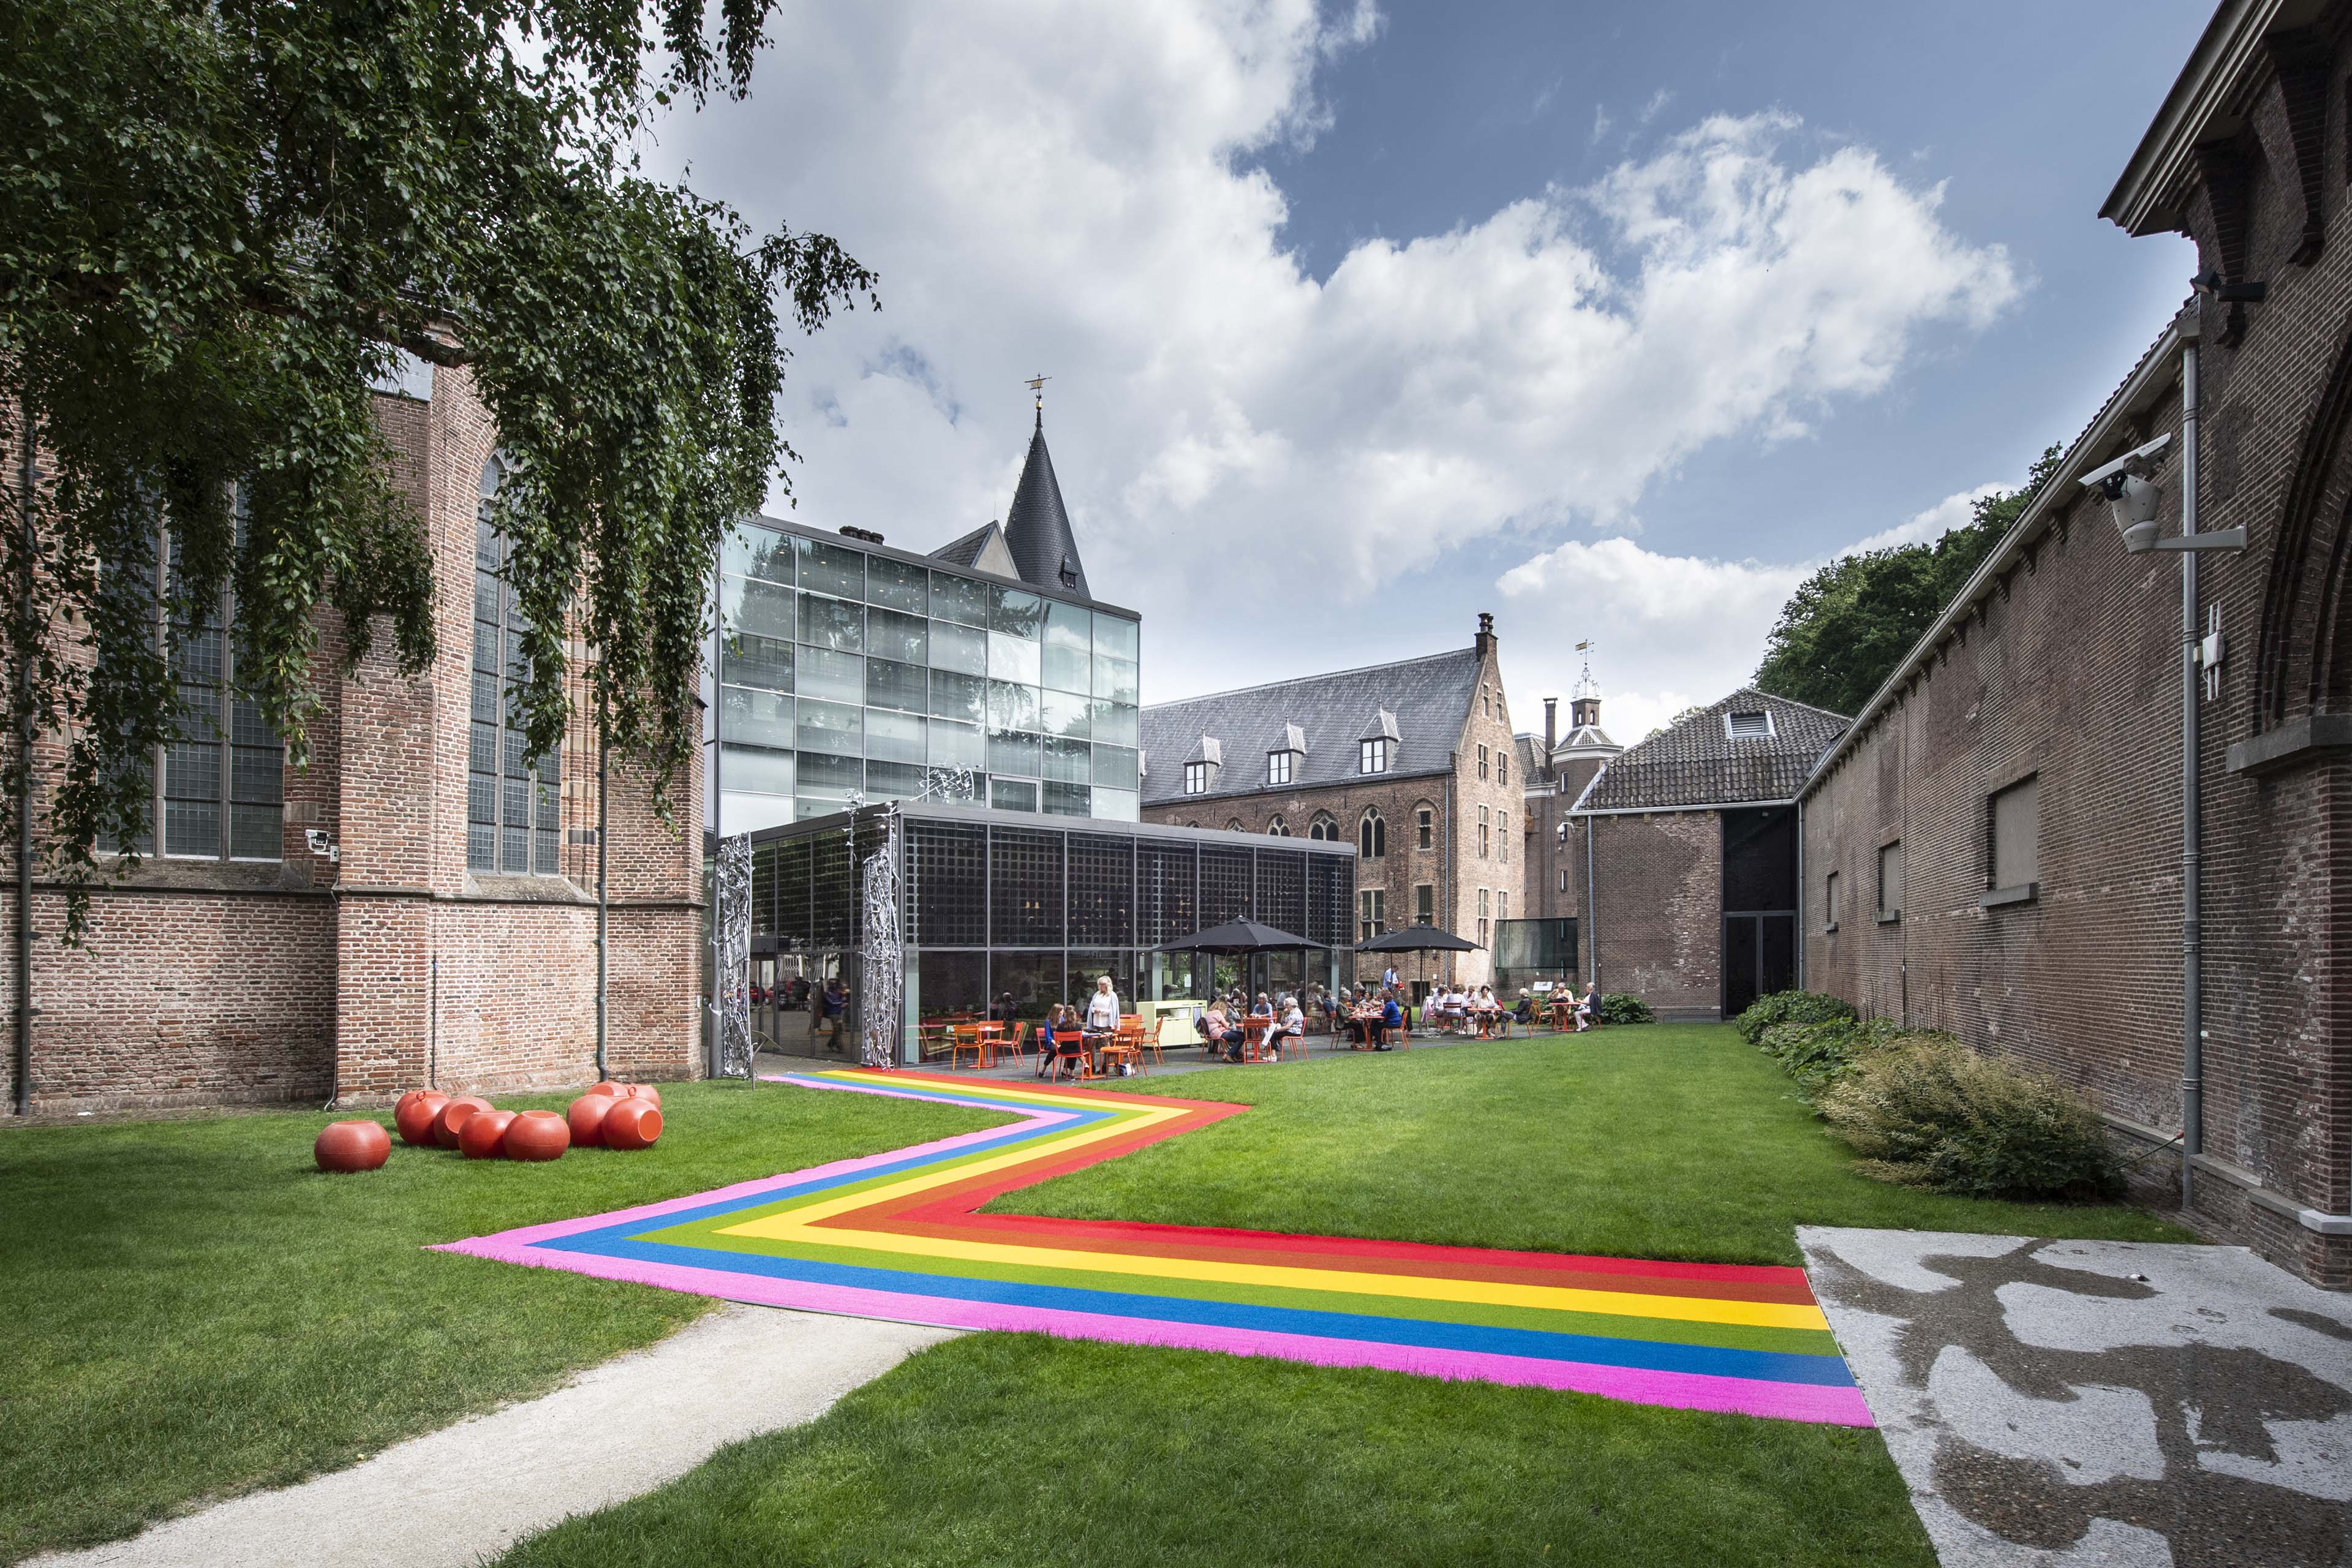 Regenboogzebrapad in de museumtuin, 2018 